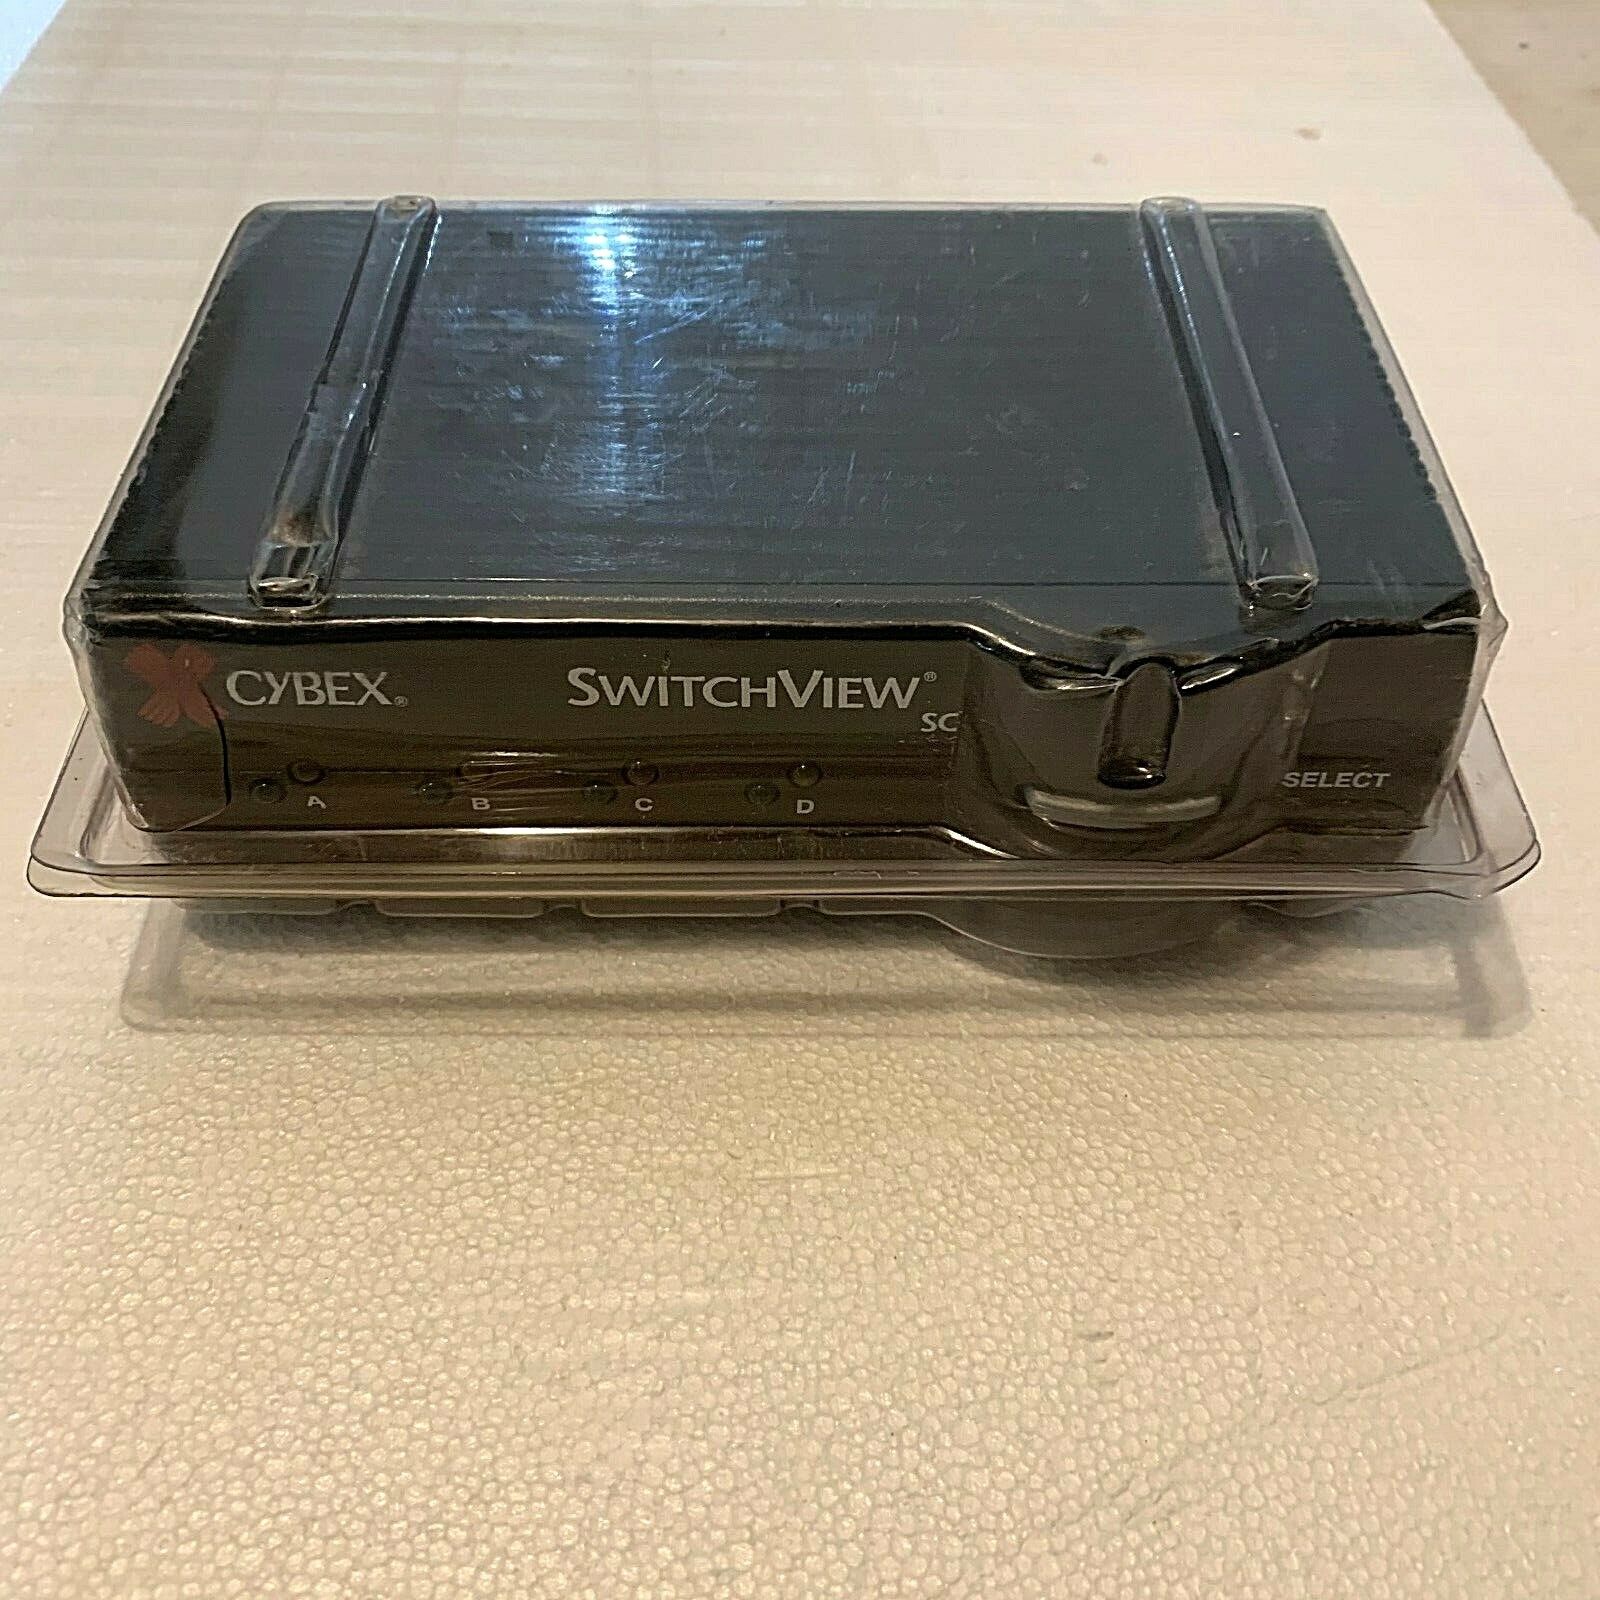 NEW CYBEX SWITCHVIEW SC  520-147-505 Black 4 port Computer Kvm Switch Box